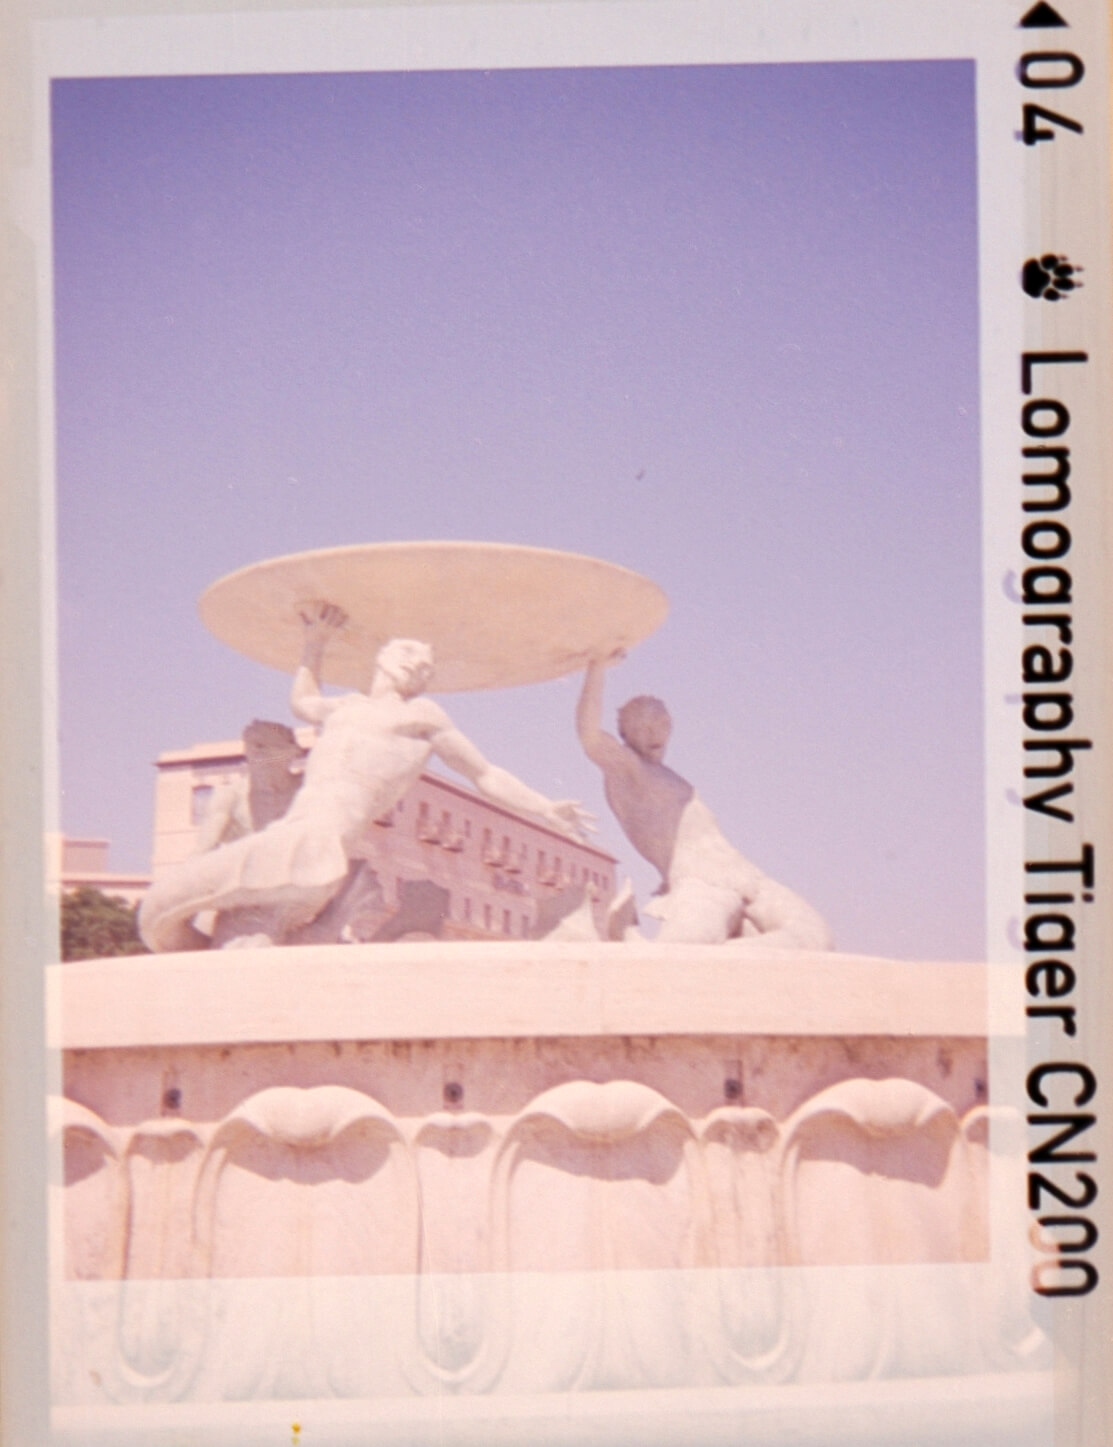 Film camera review: Kodak Pocket Instamatic 10 + Lomography Tiger CN200 film - by Anna Shotadze